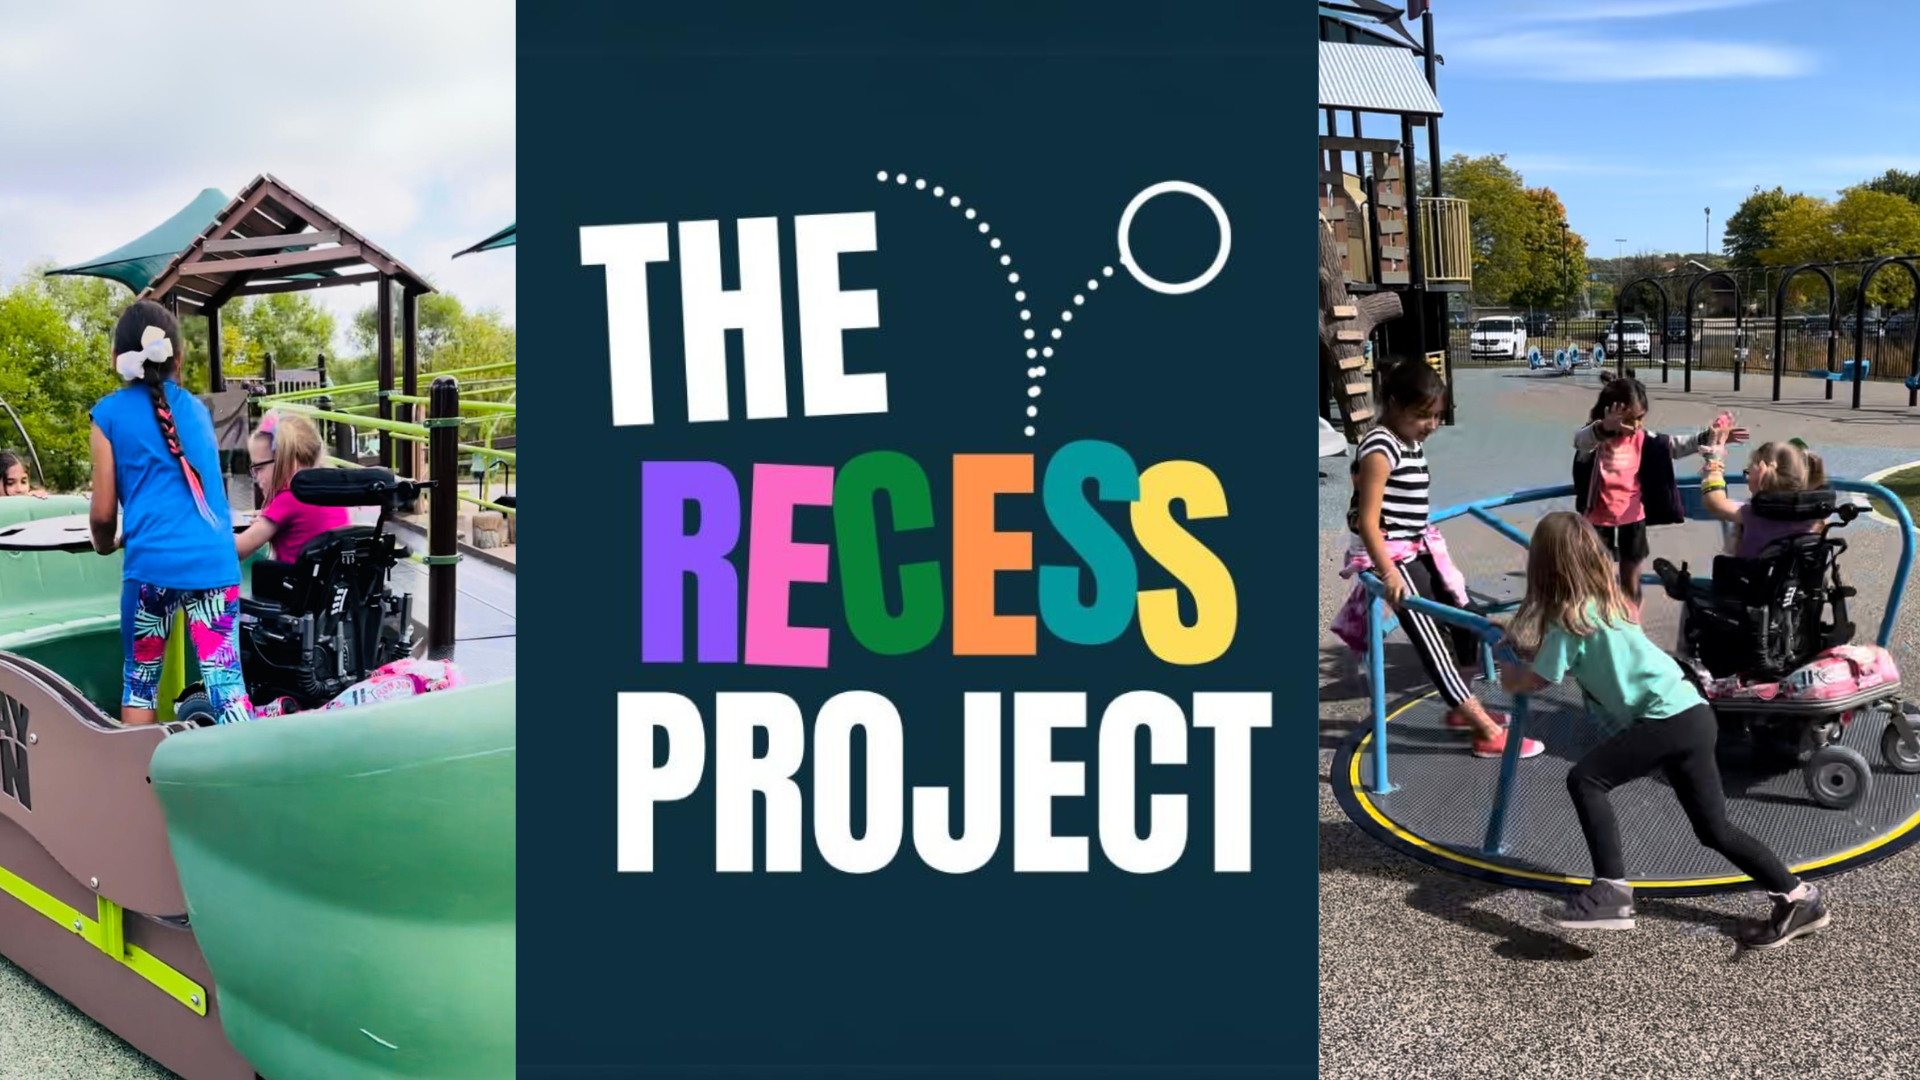 Meet the Recess Project